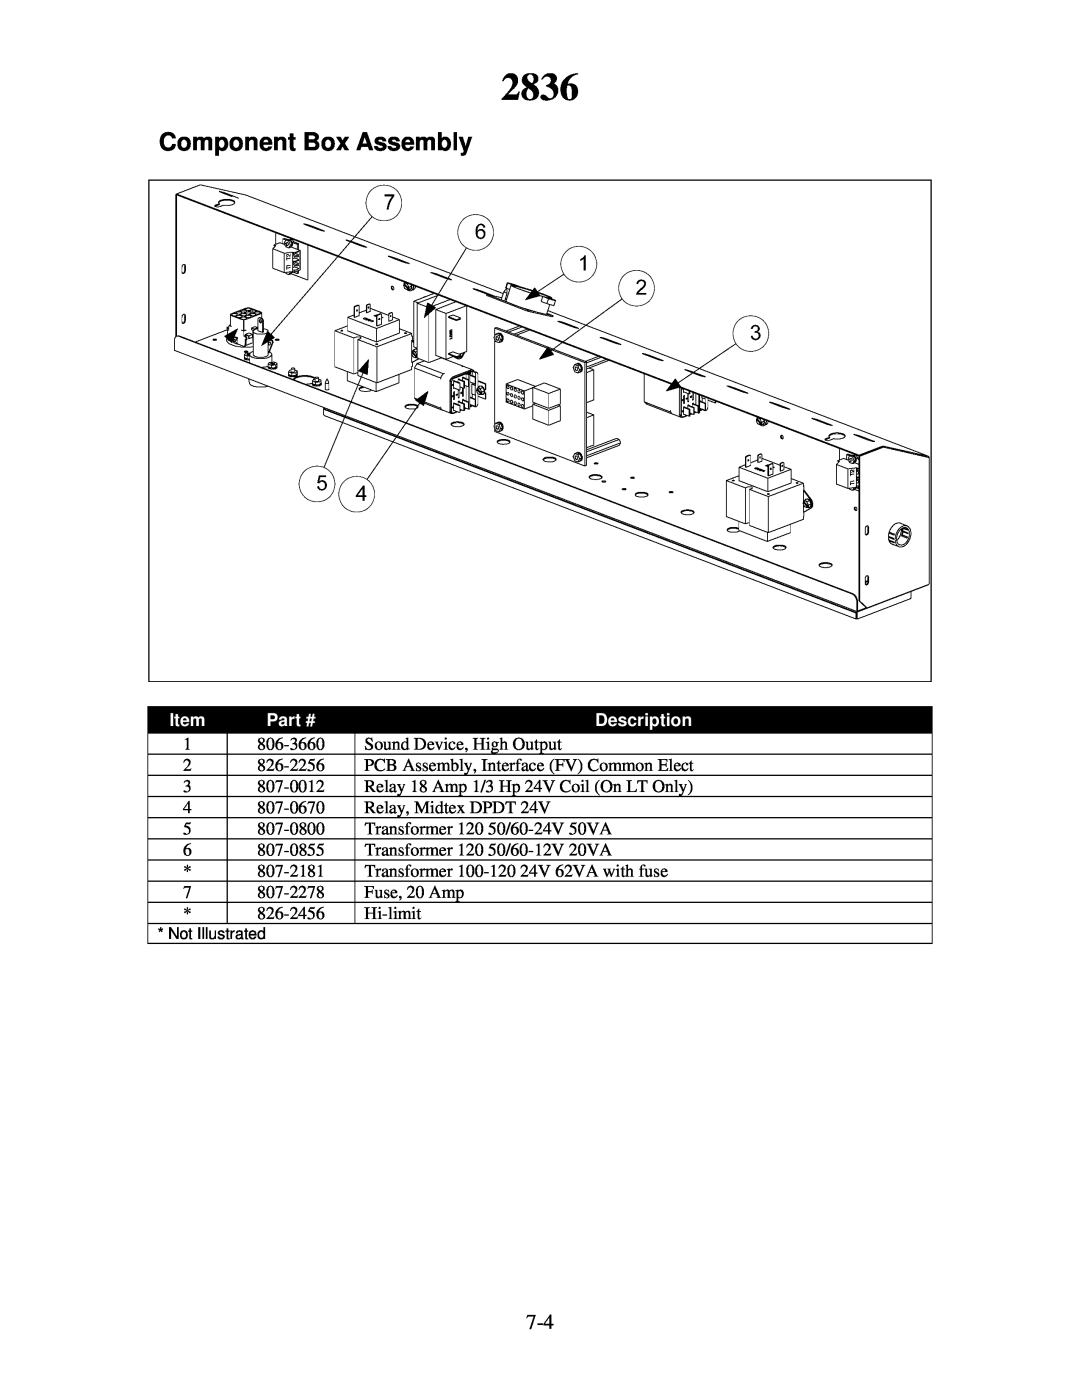 Frymaster 8196321 manual Component Box Assembly, 2836, Description 